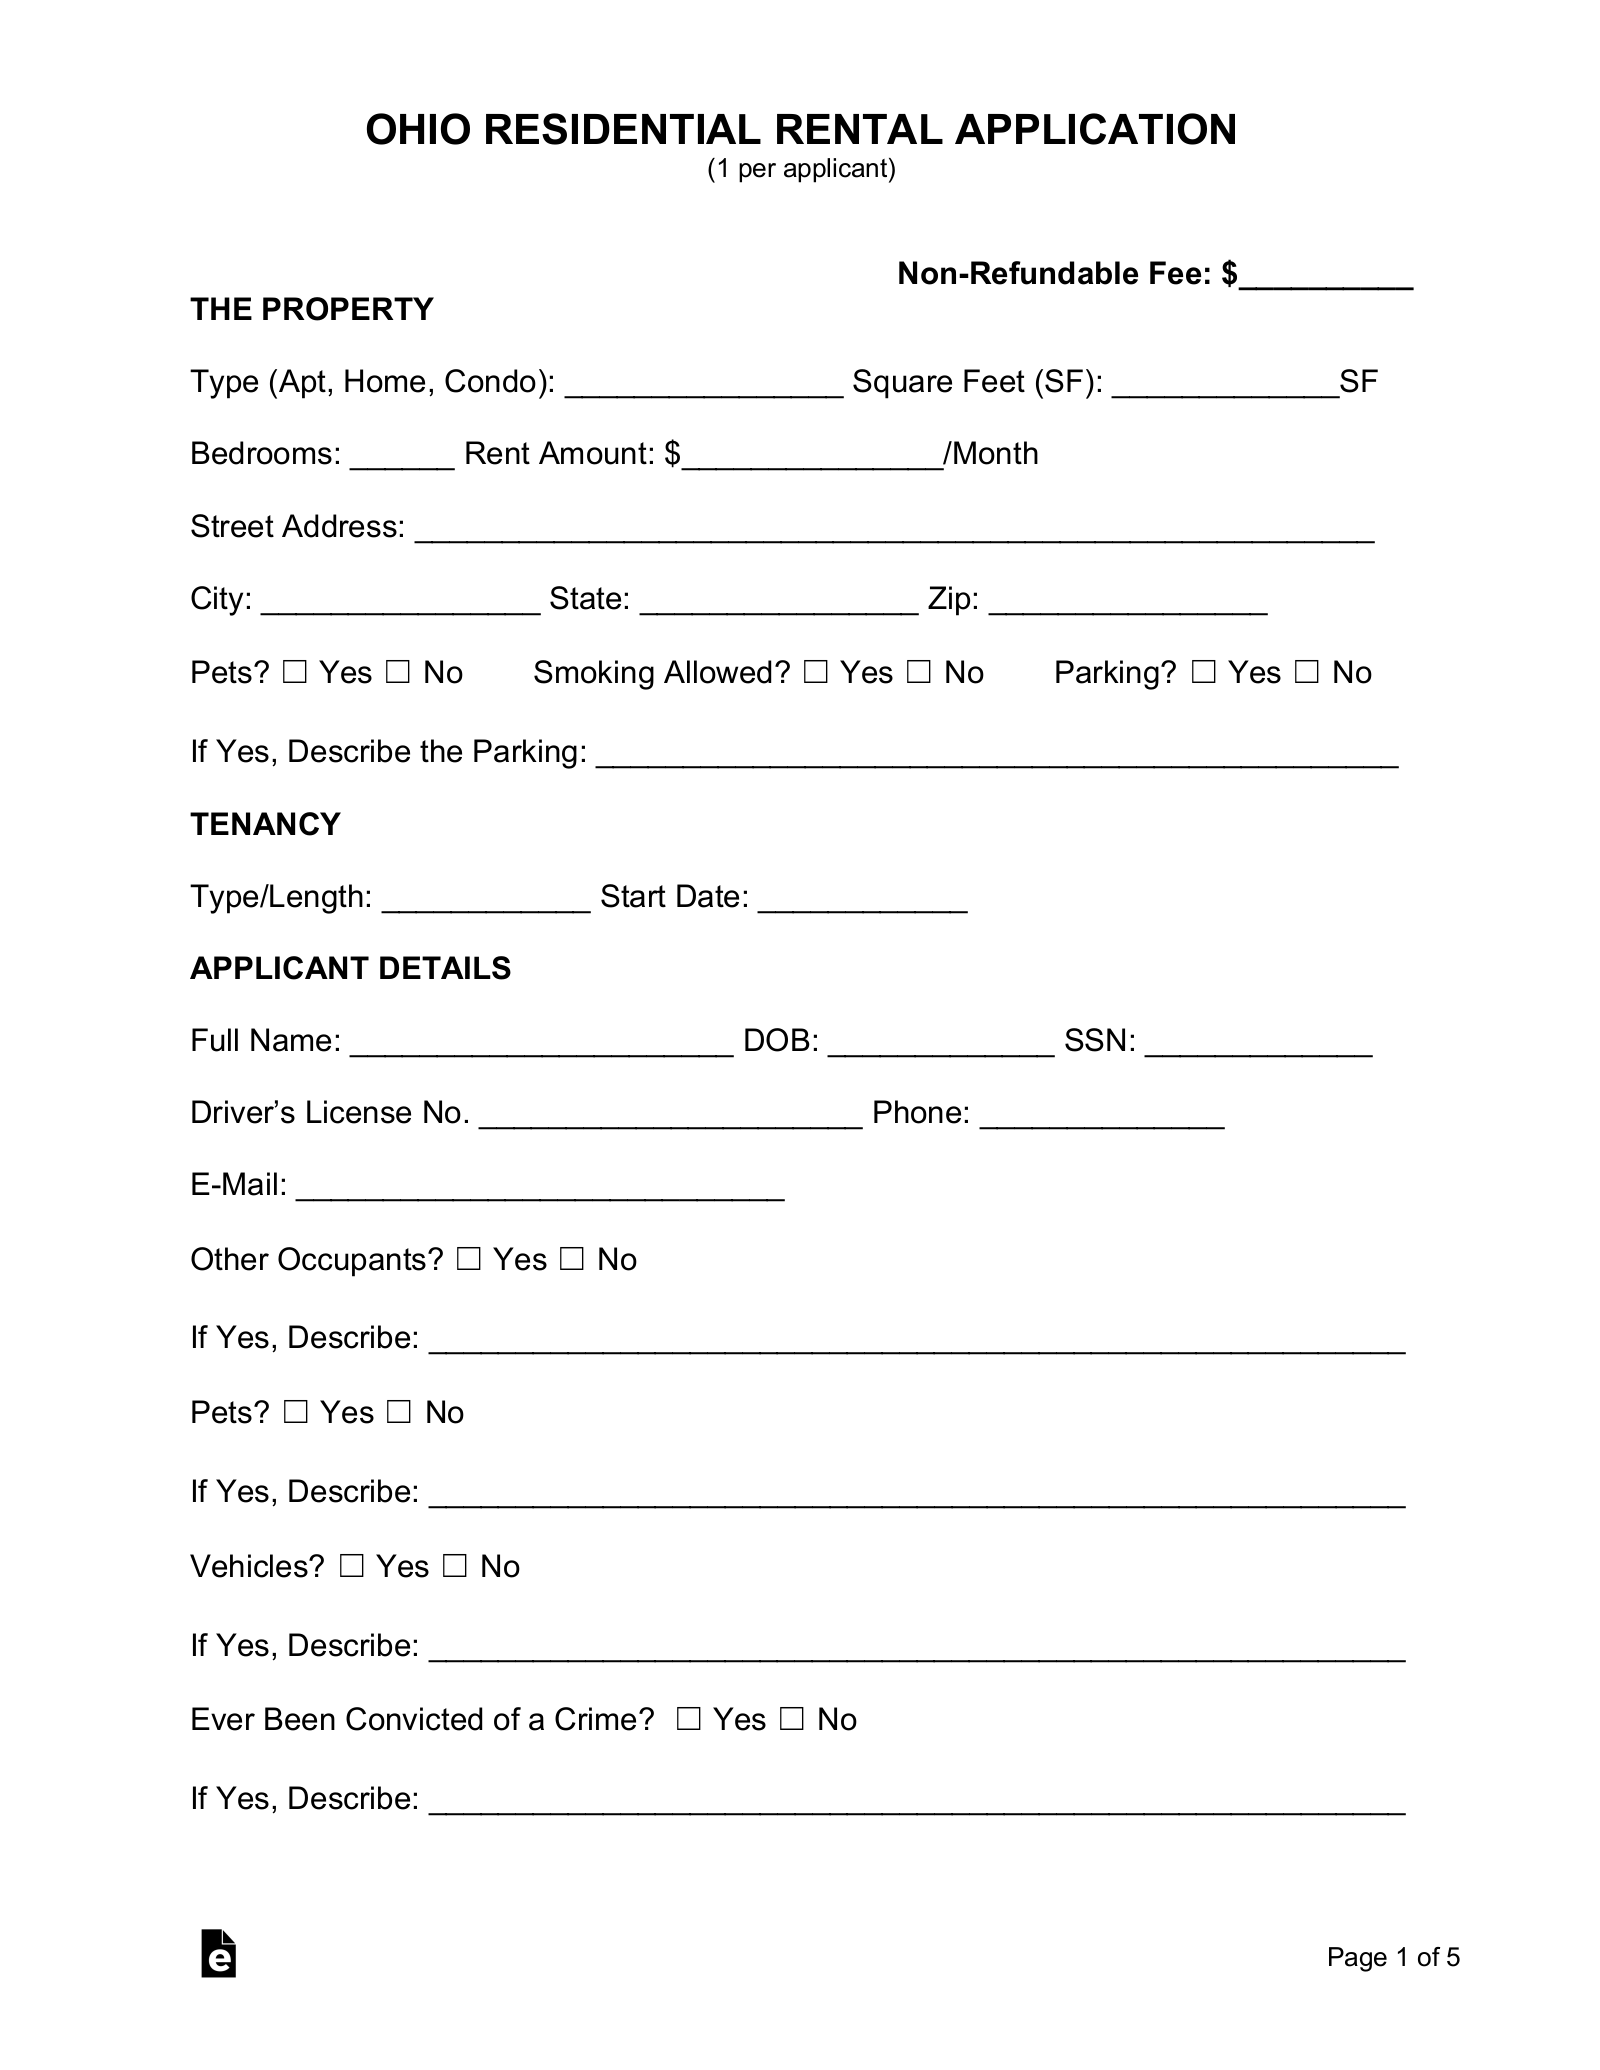 free-ohio-rental-application-form-pdf-eforms